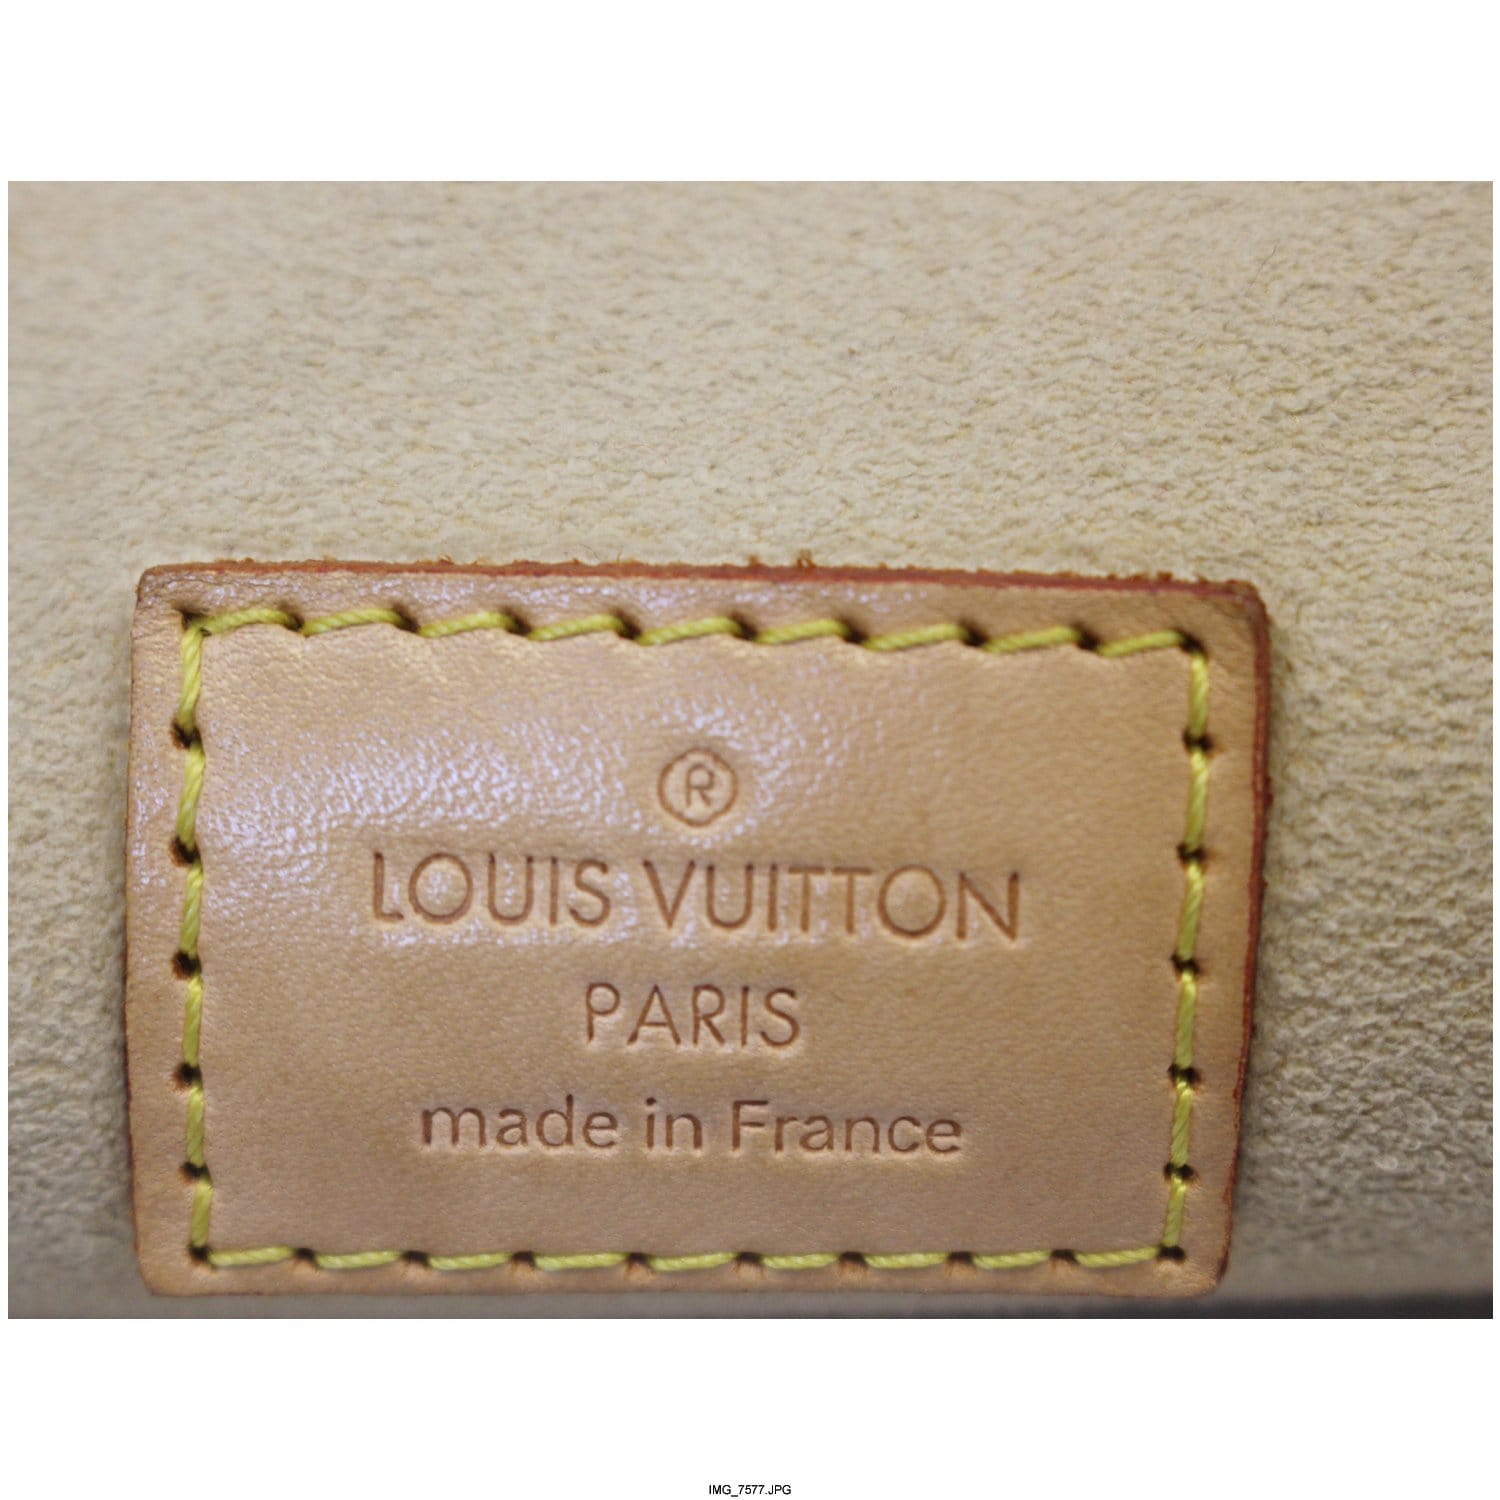 LOUIS VUITTON Monogram HUDSON PM Shoulder Bag w/ extra CROSSBODY STRAP EUC!